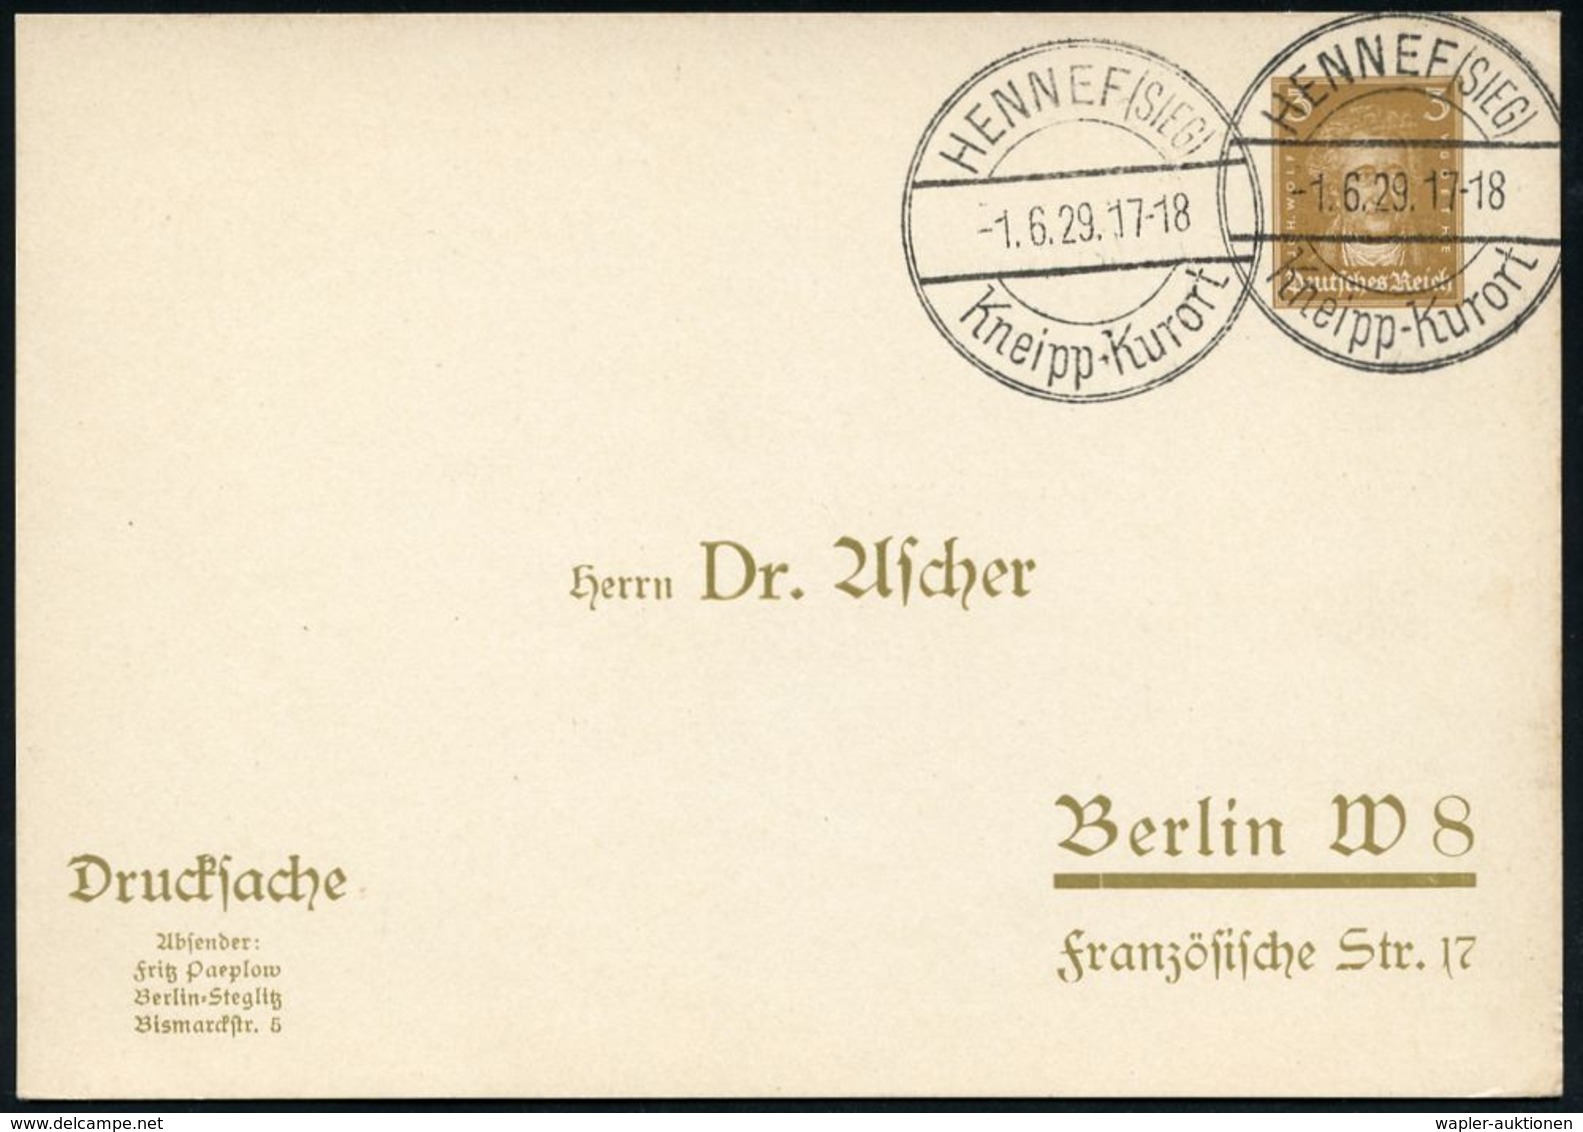 SEBASTIAN KNEIPP / KNEIPP-KURORTE : HENNEF (SIEG)/ Kneipp-Kurort 1929 (1.6.) HWSt Klar Auf PP 3 Pf. Goethe (Paeplow-Asch - Medicine